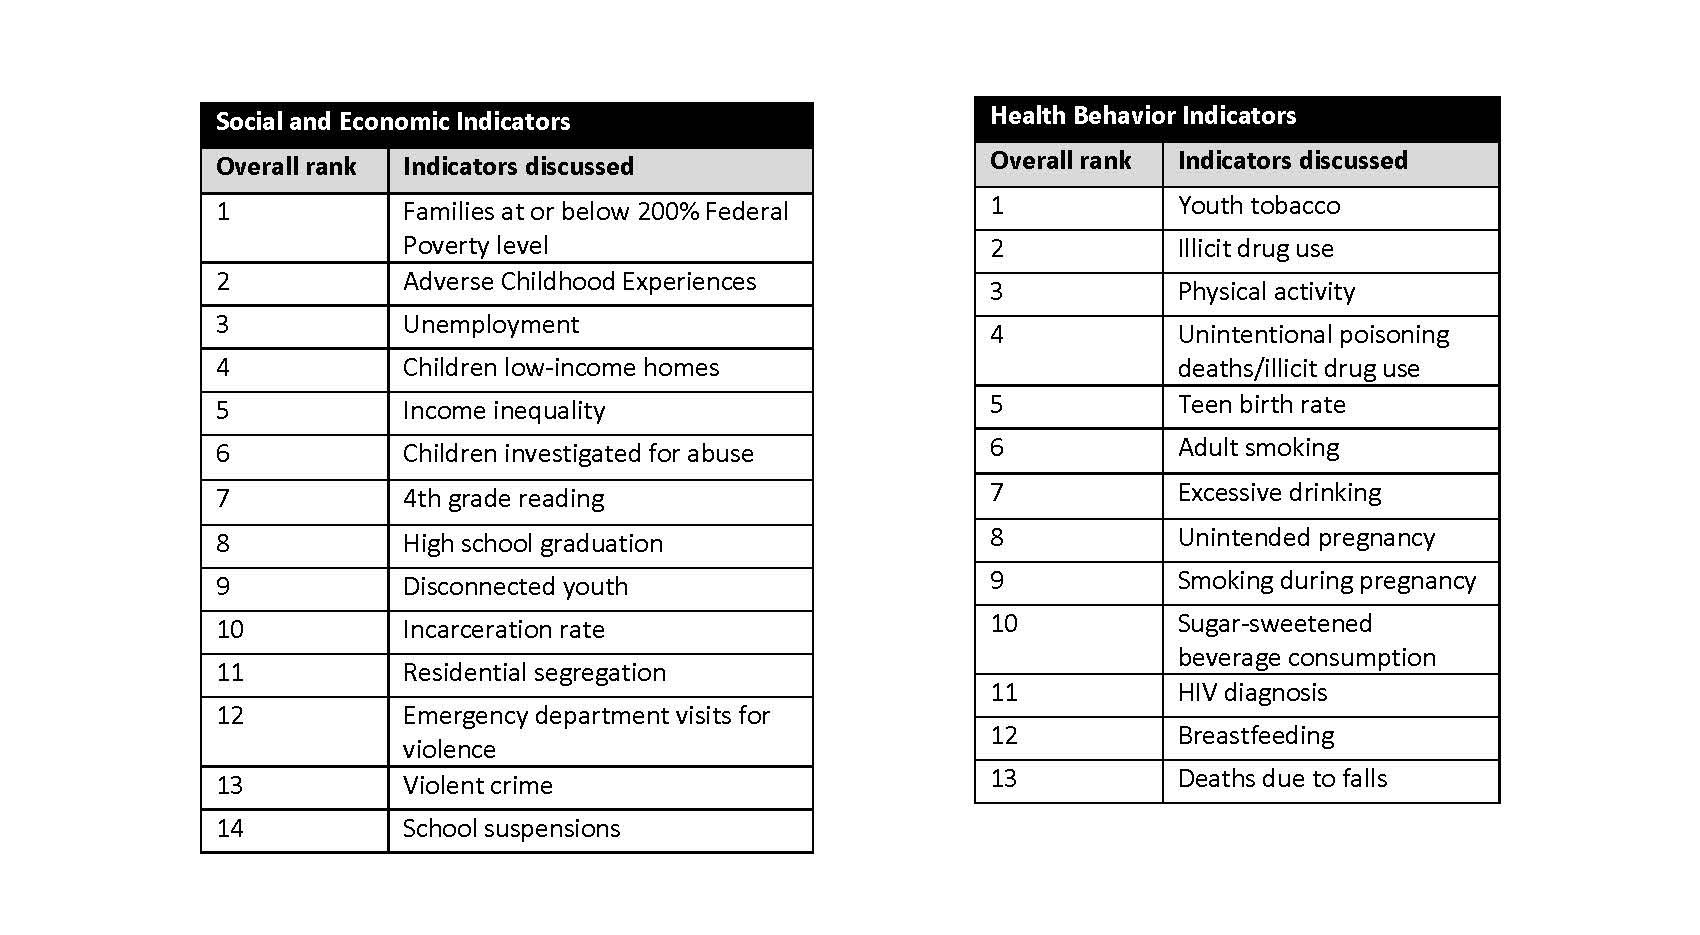 Lists of social and economic indicators and health behavior indicators